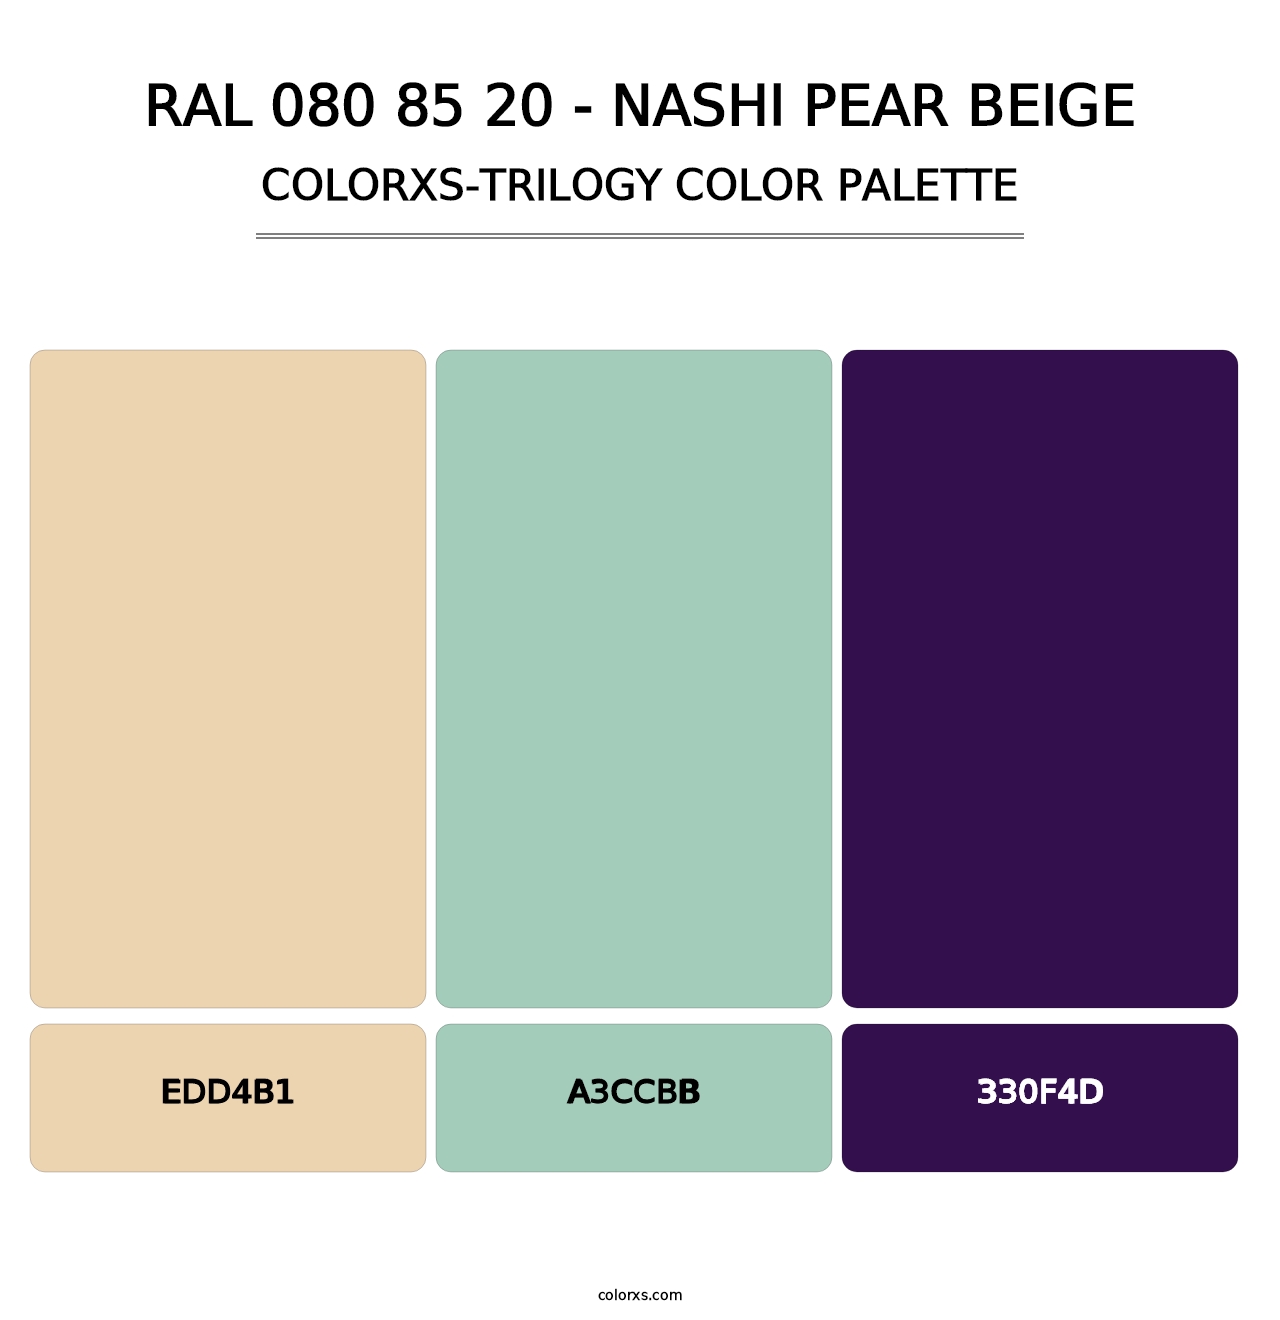 RAL 080 85 20 - Nashi Pear Beige - Colorxs Trilogy Palette